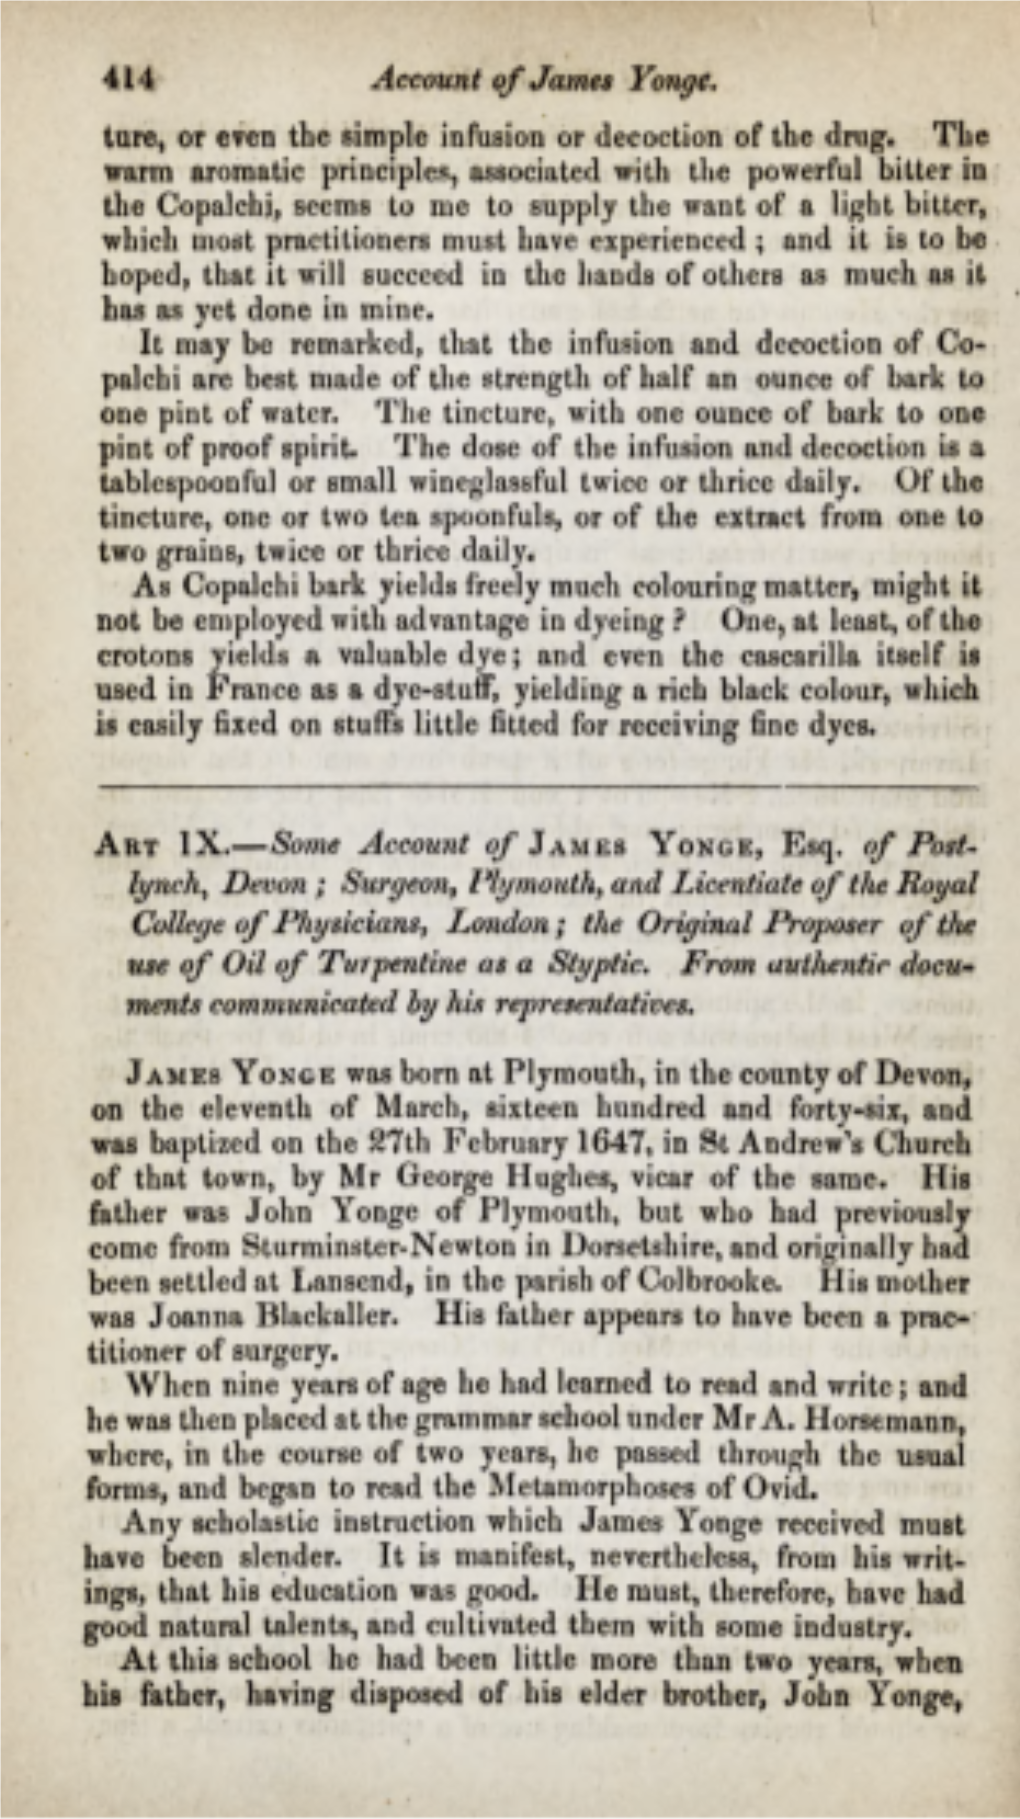 Some Account of James Yonge, Esq. of Postlynch, Devon; Surgeon